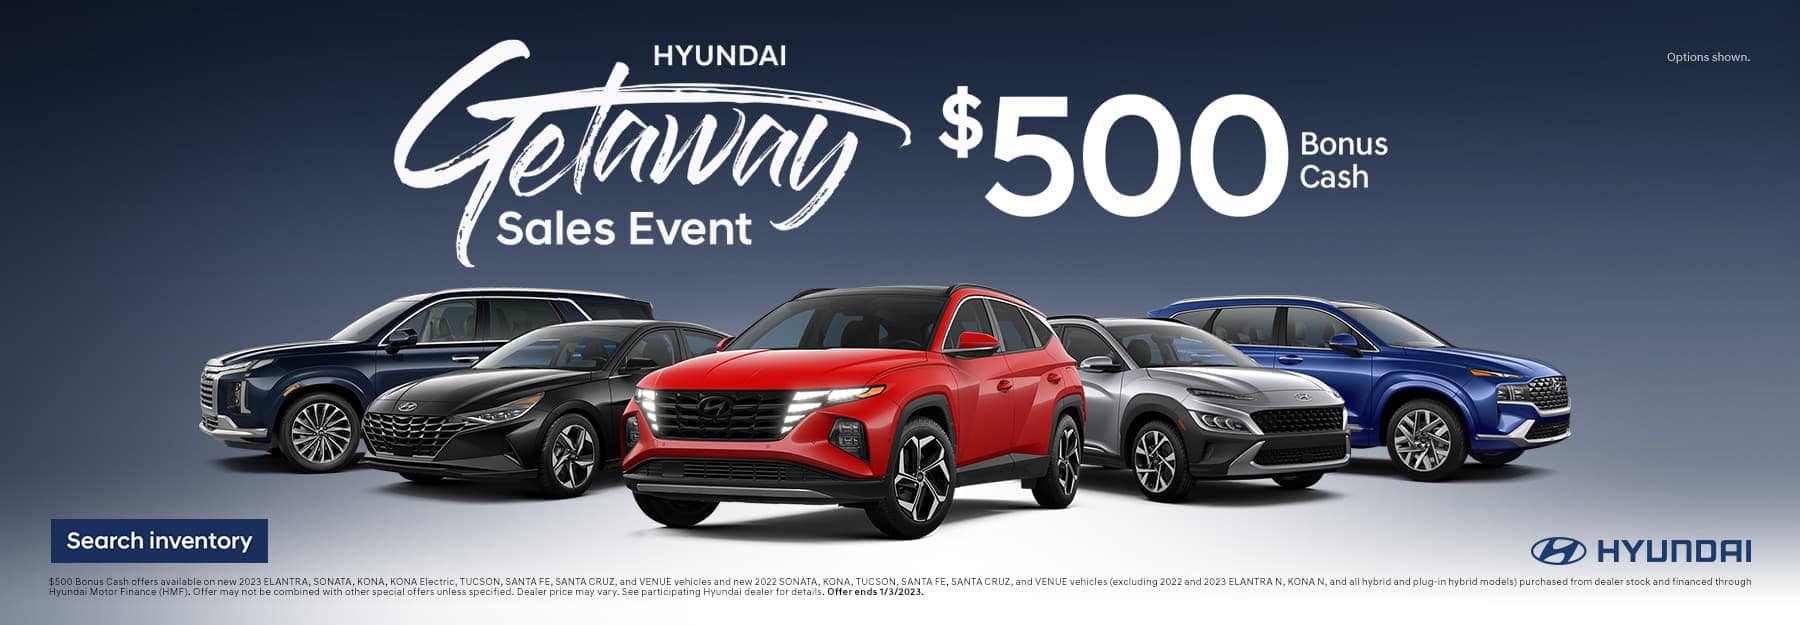 Hyundai Getaway Sales Event $500 bonus cash